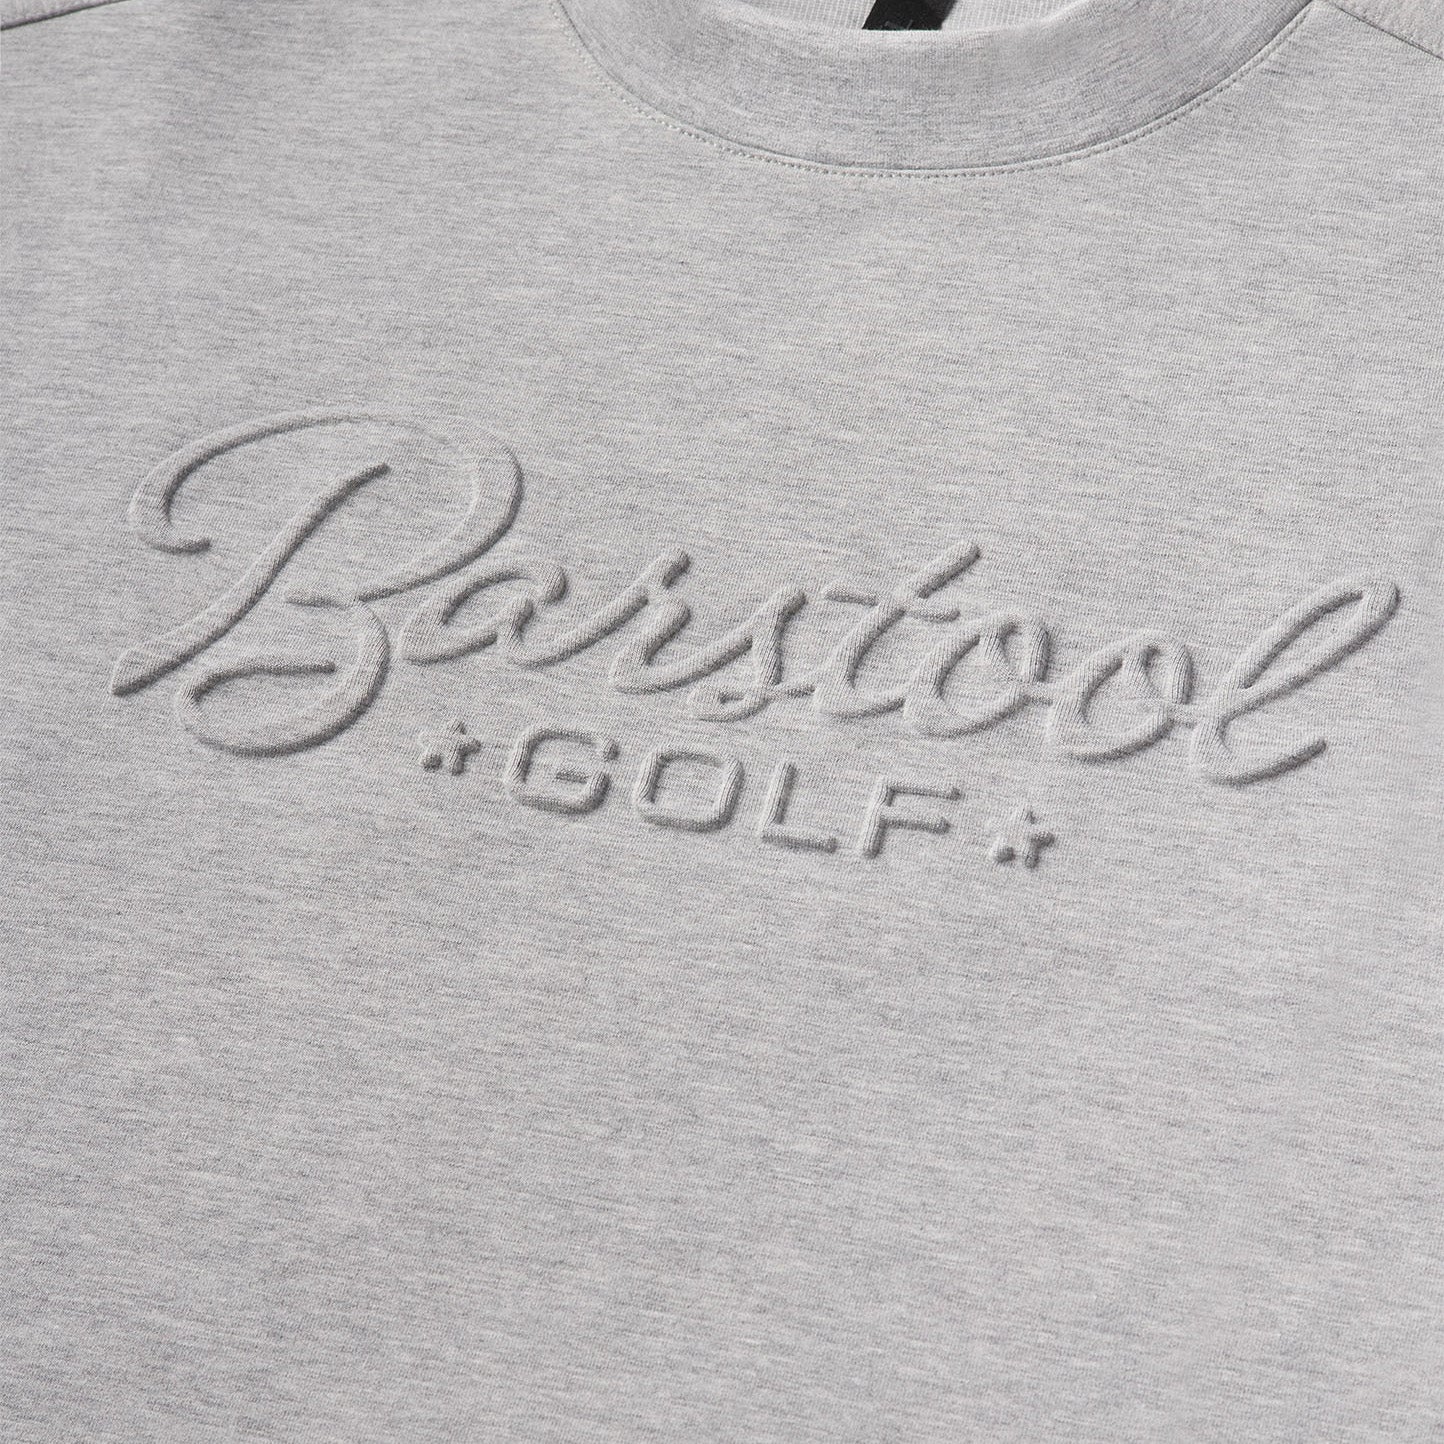 UNRL x Barstool Golf Script Embossed Crewneck-Crewnecks-Fore Play-Barstool Sports